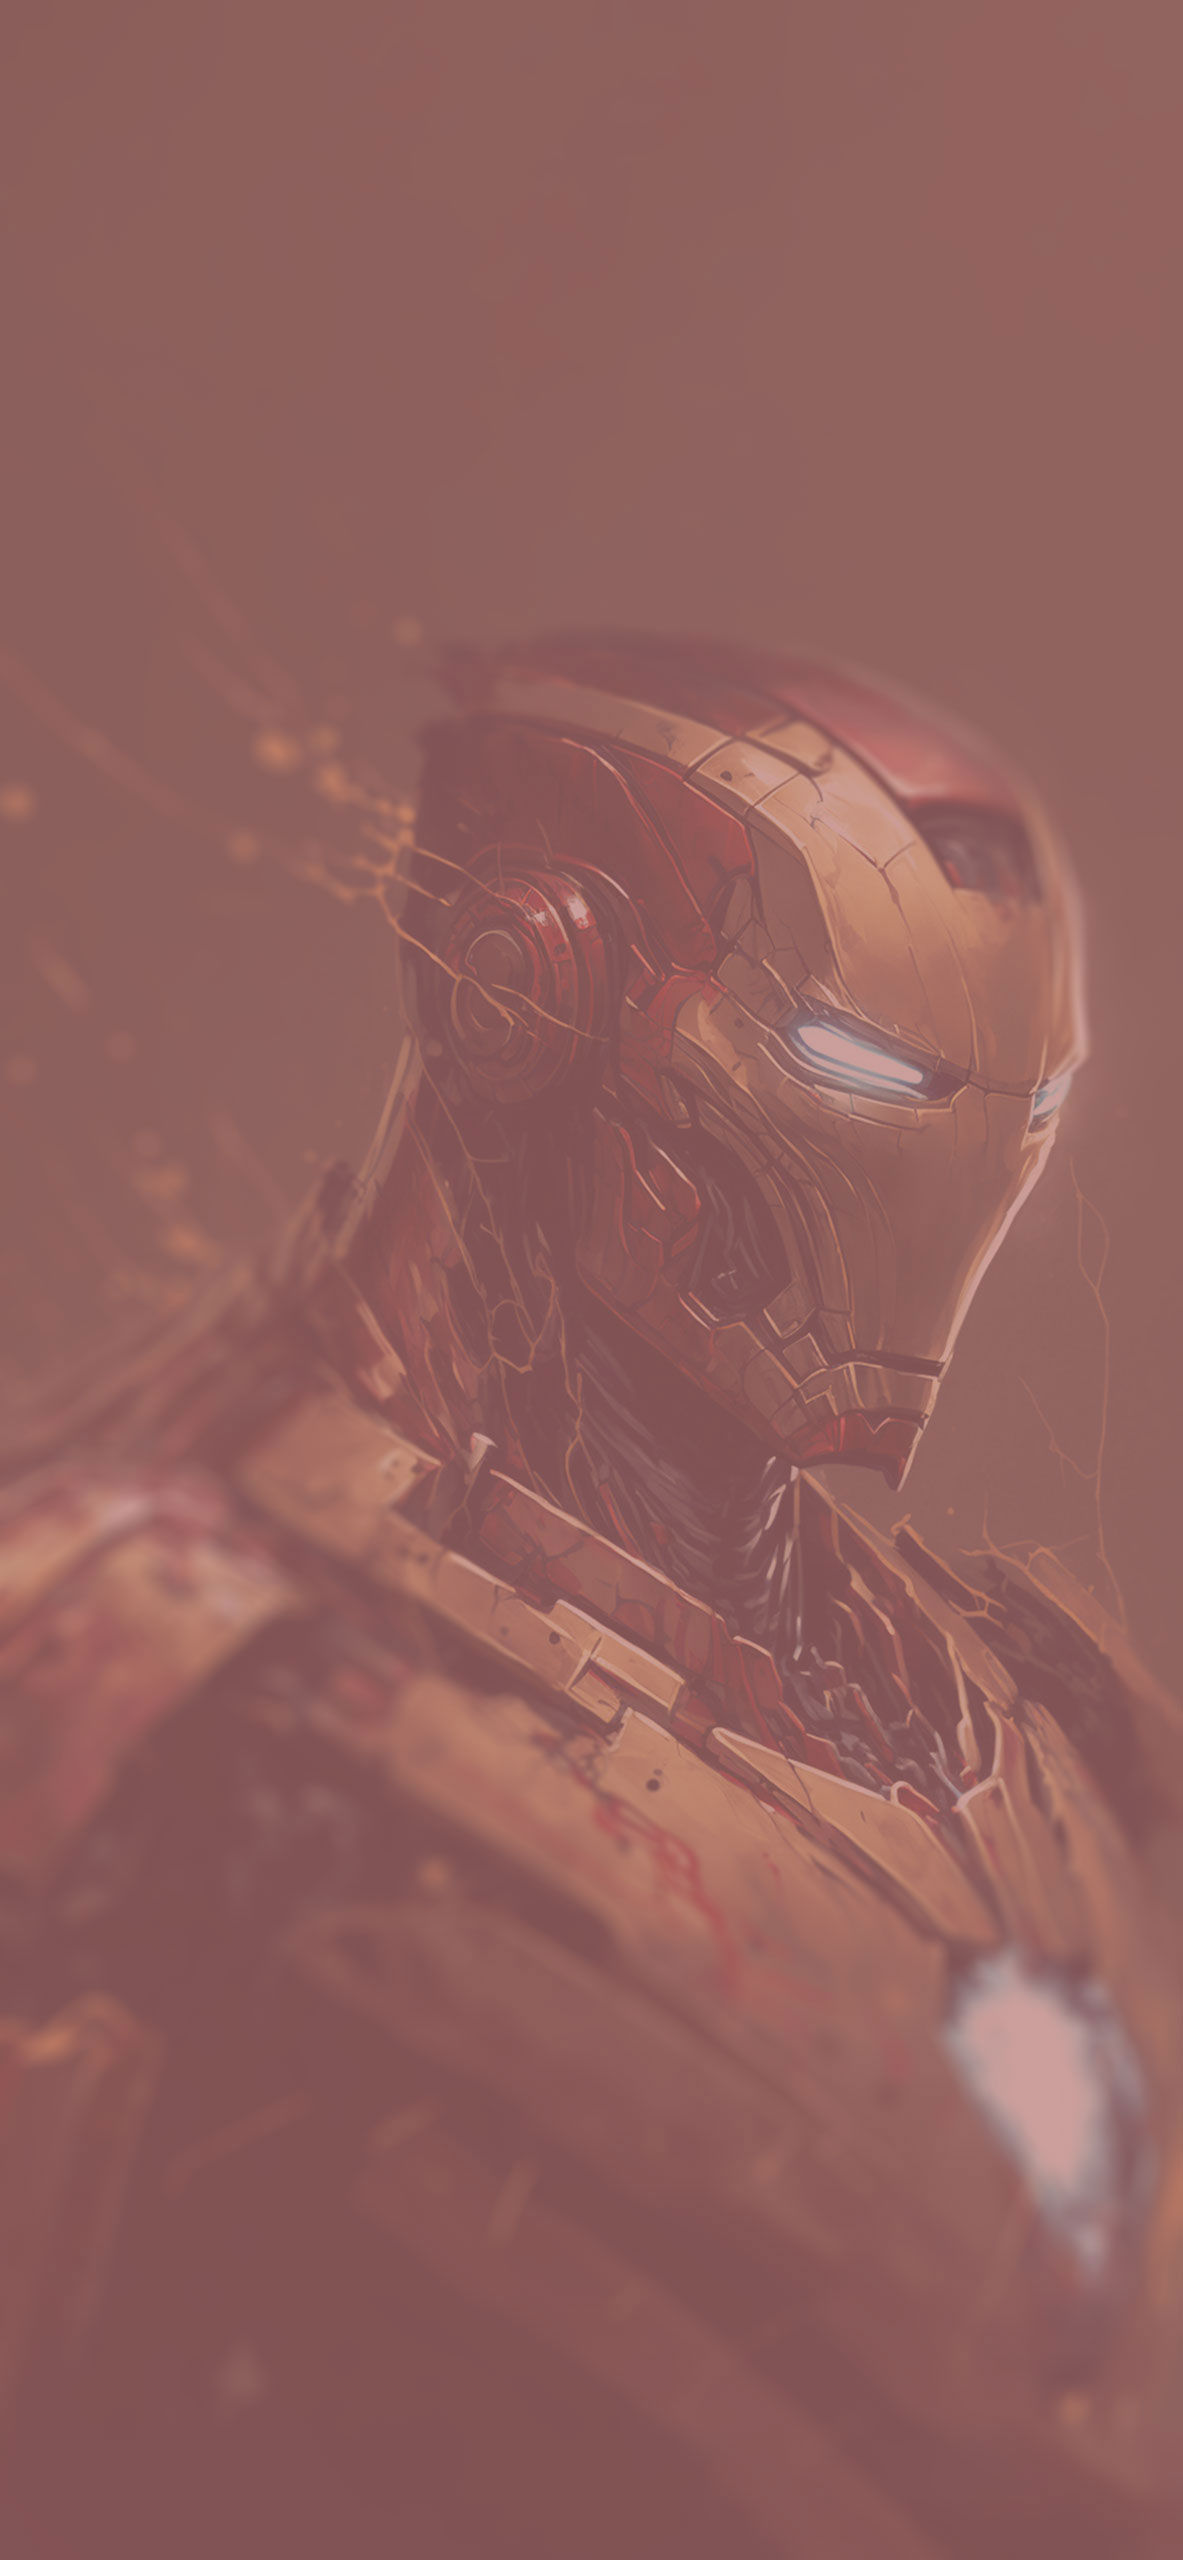 Marvel Iron Man Wallpaper - Marvel Aesthetic Wallpapers iPhone